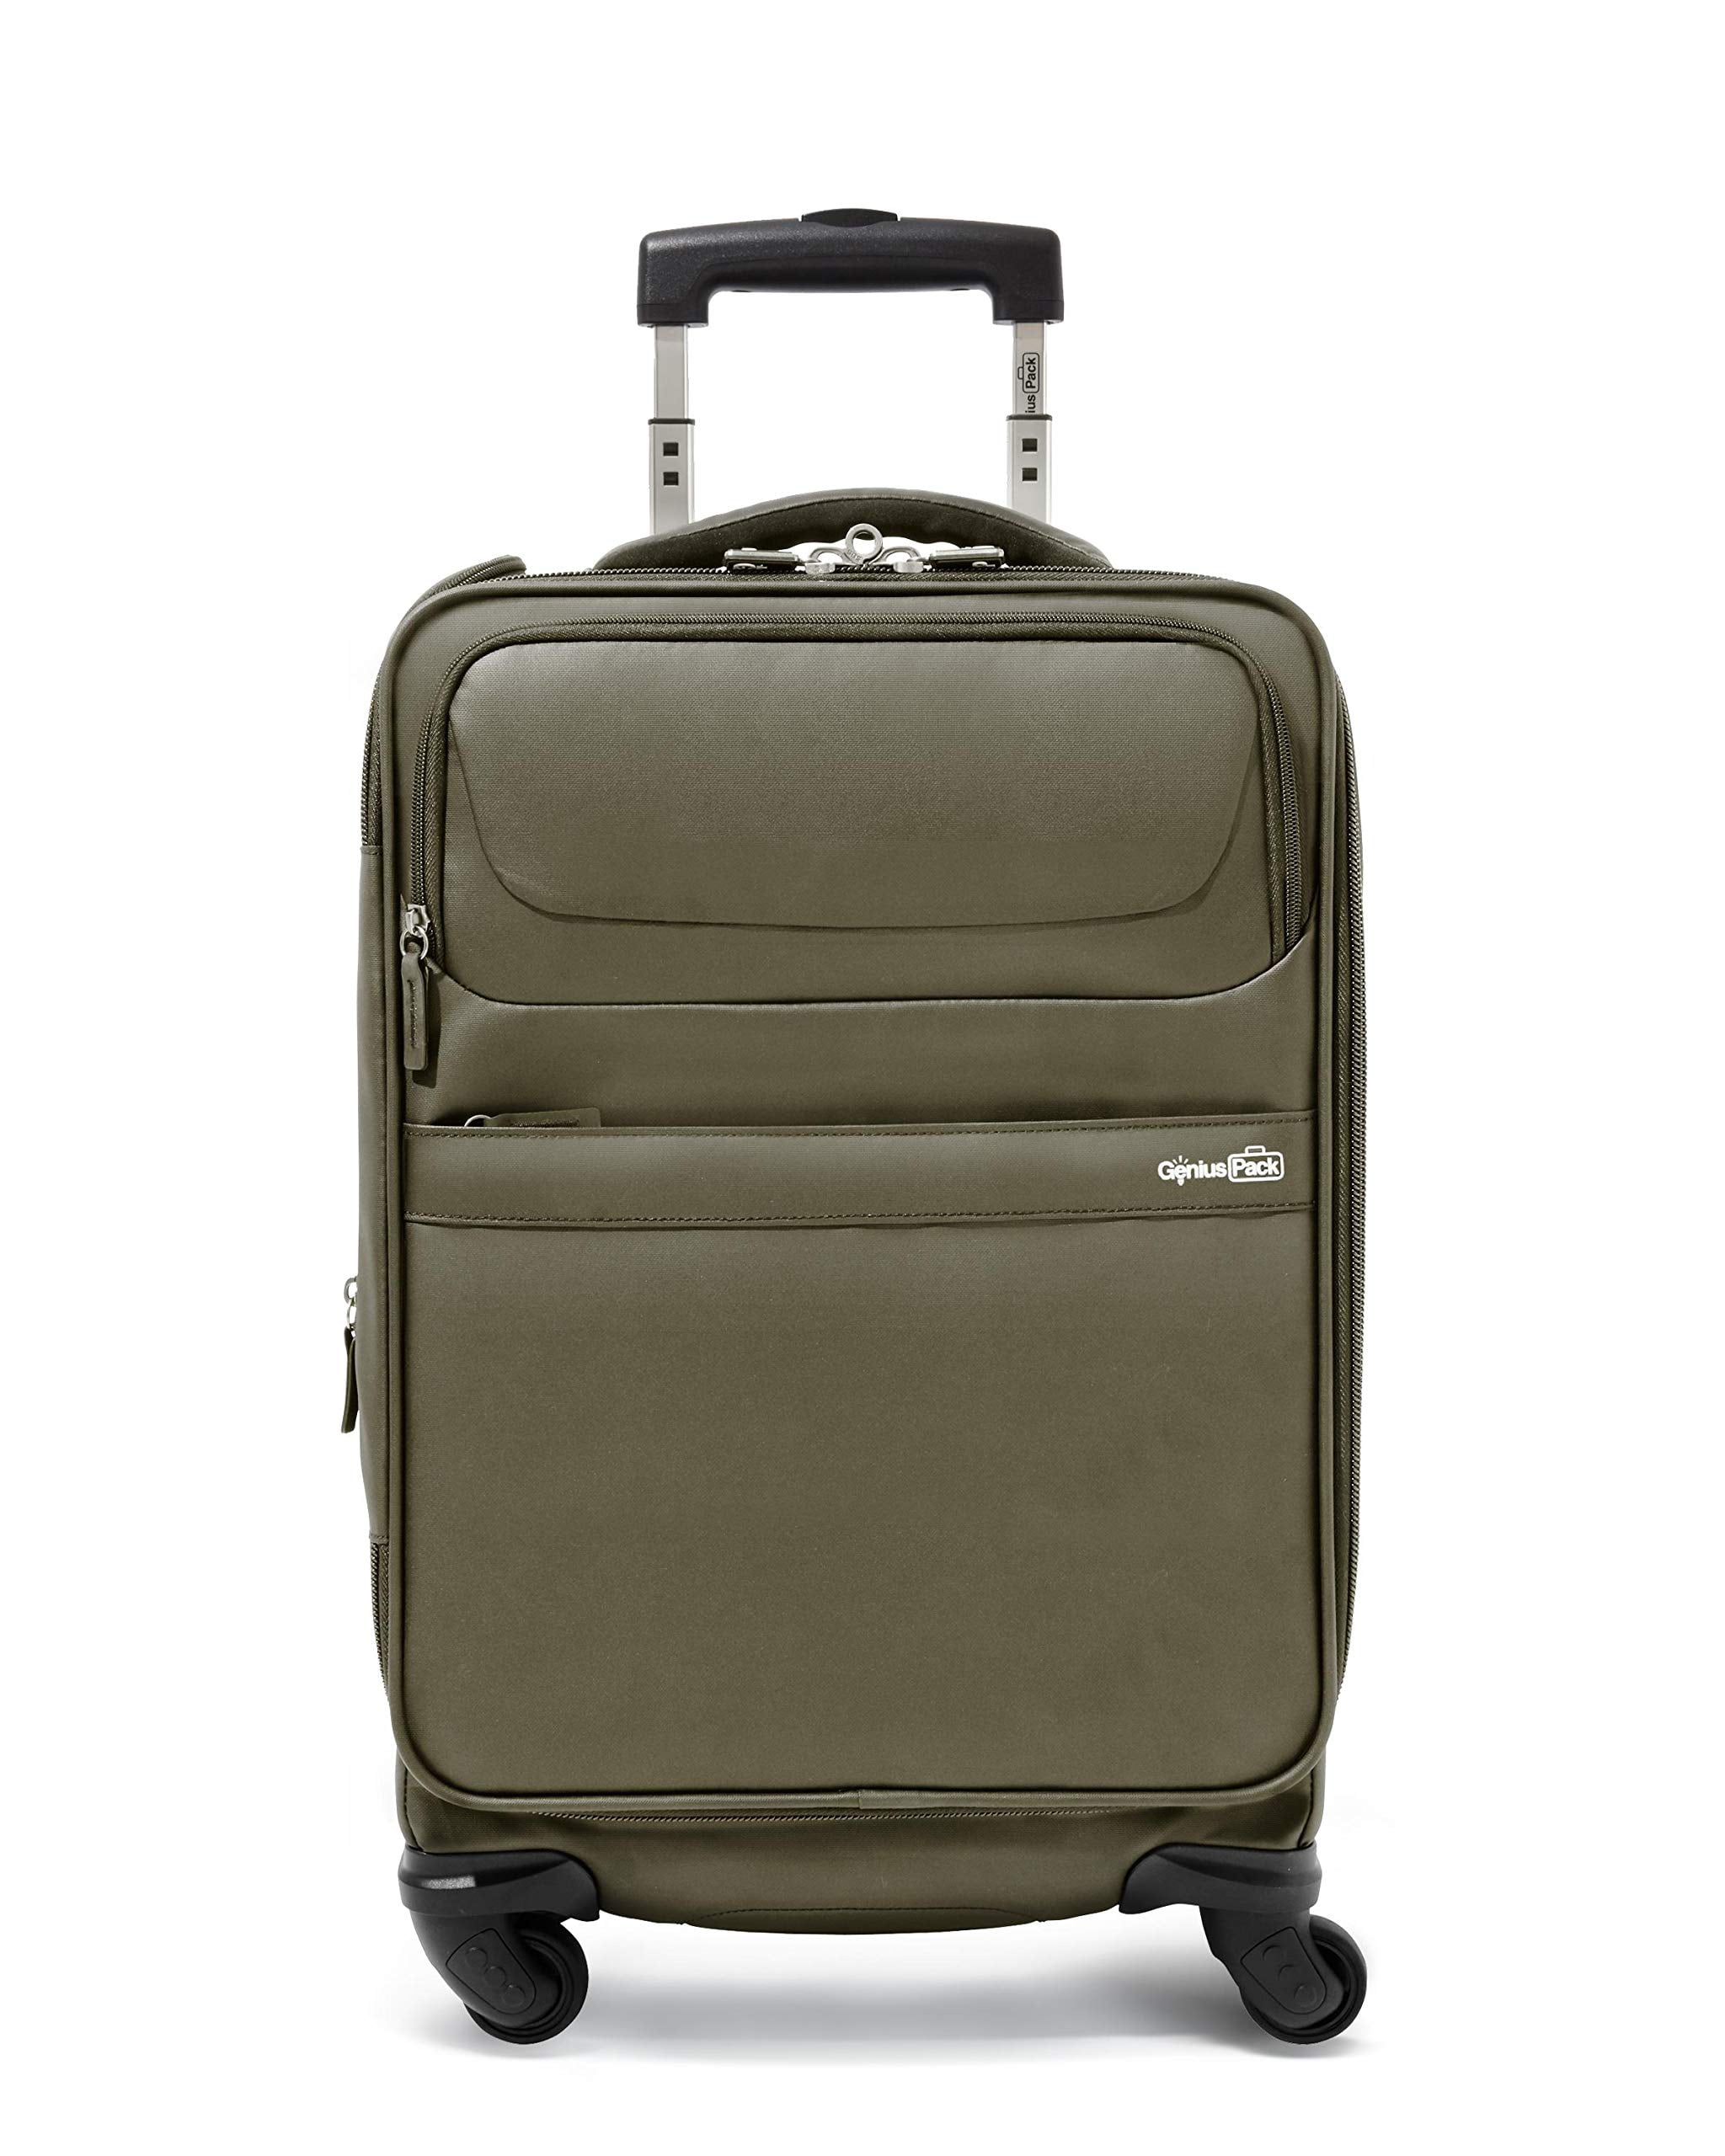 genius pack luggage